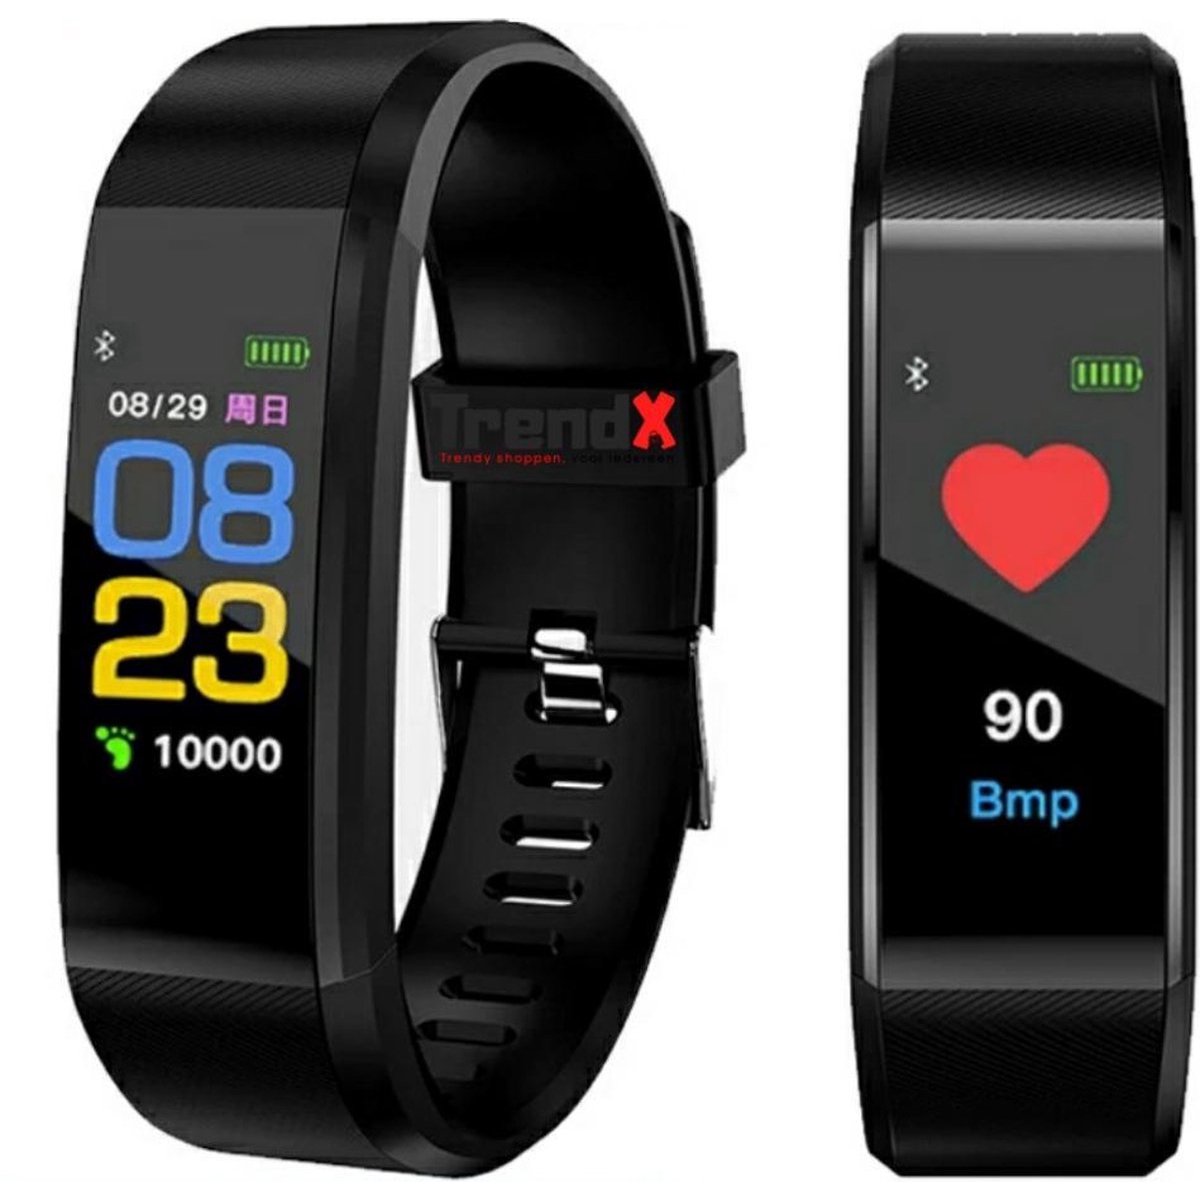 TrendX Smart Watch 115 Plus - Horloge - Bluetooth - Waterdicht - Zwart